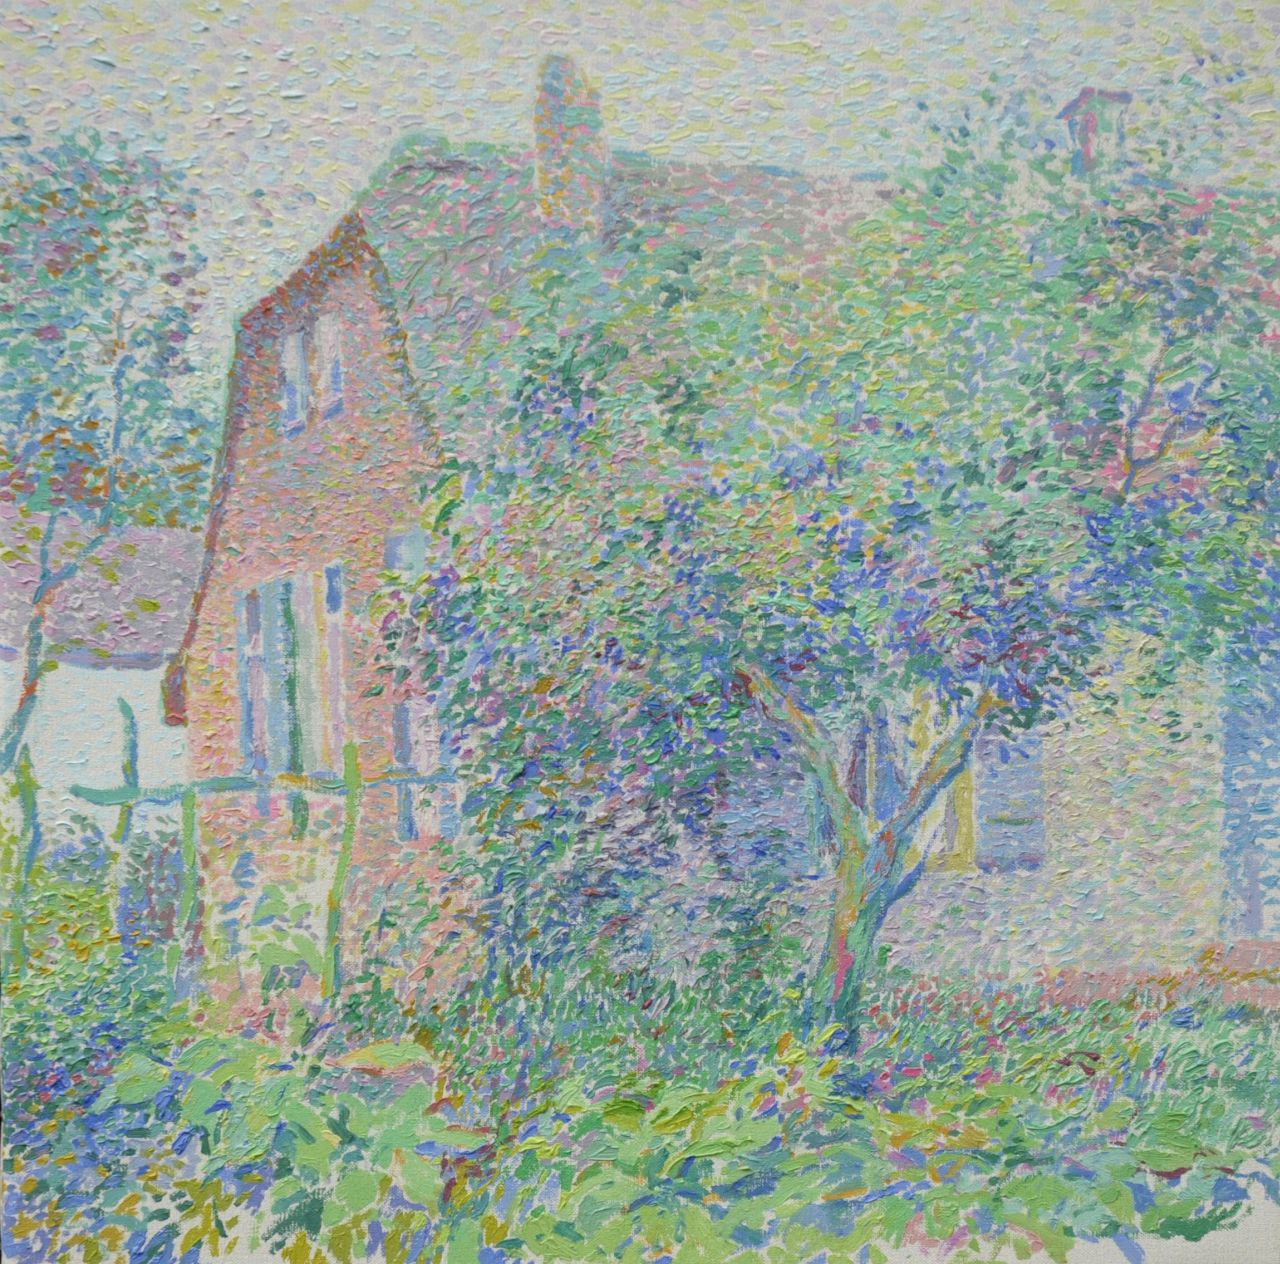 Boer H. de | Hessel de Boer | Paintings offered for sale | A farmhouse in summer, oil on canvas 49.0 x 48.7 cm